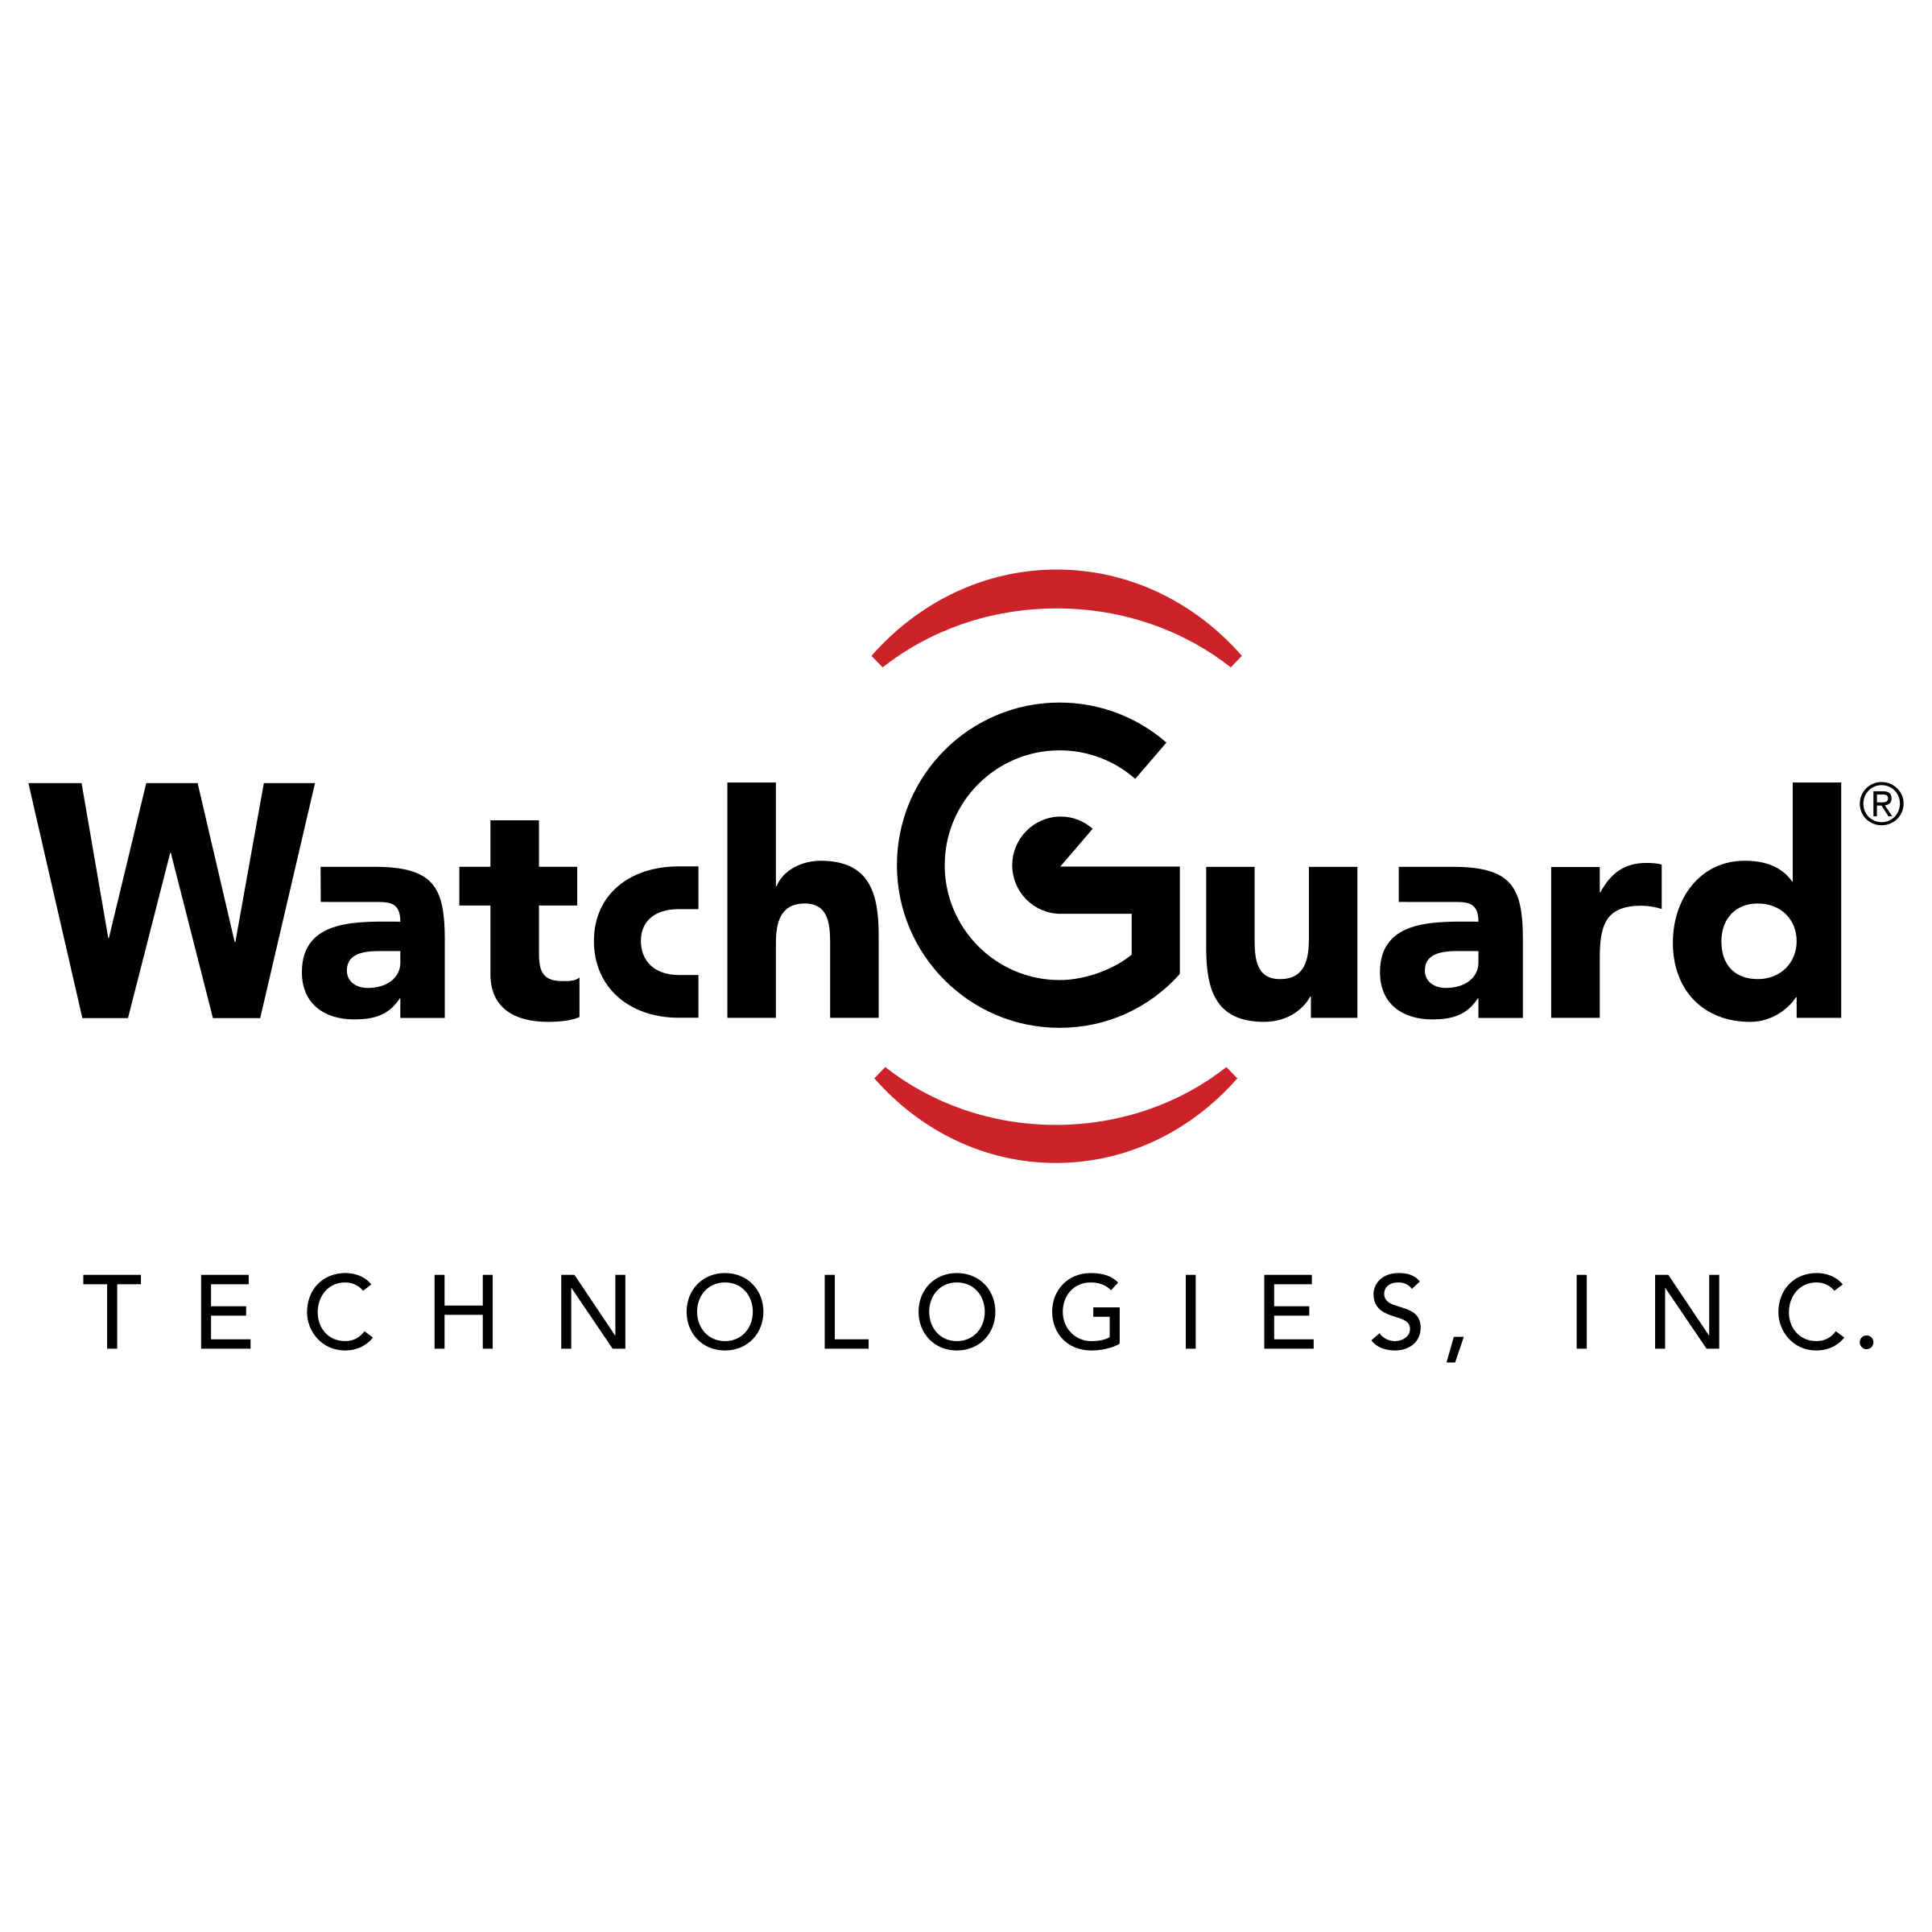 WatchGuard Logo - WatchGuard Technologies Logo PNG Transparent & SVG Vector - Freebie ...